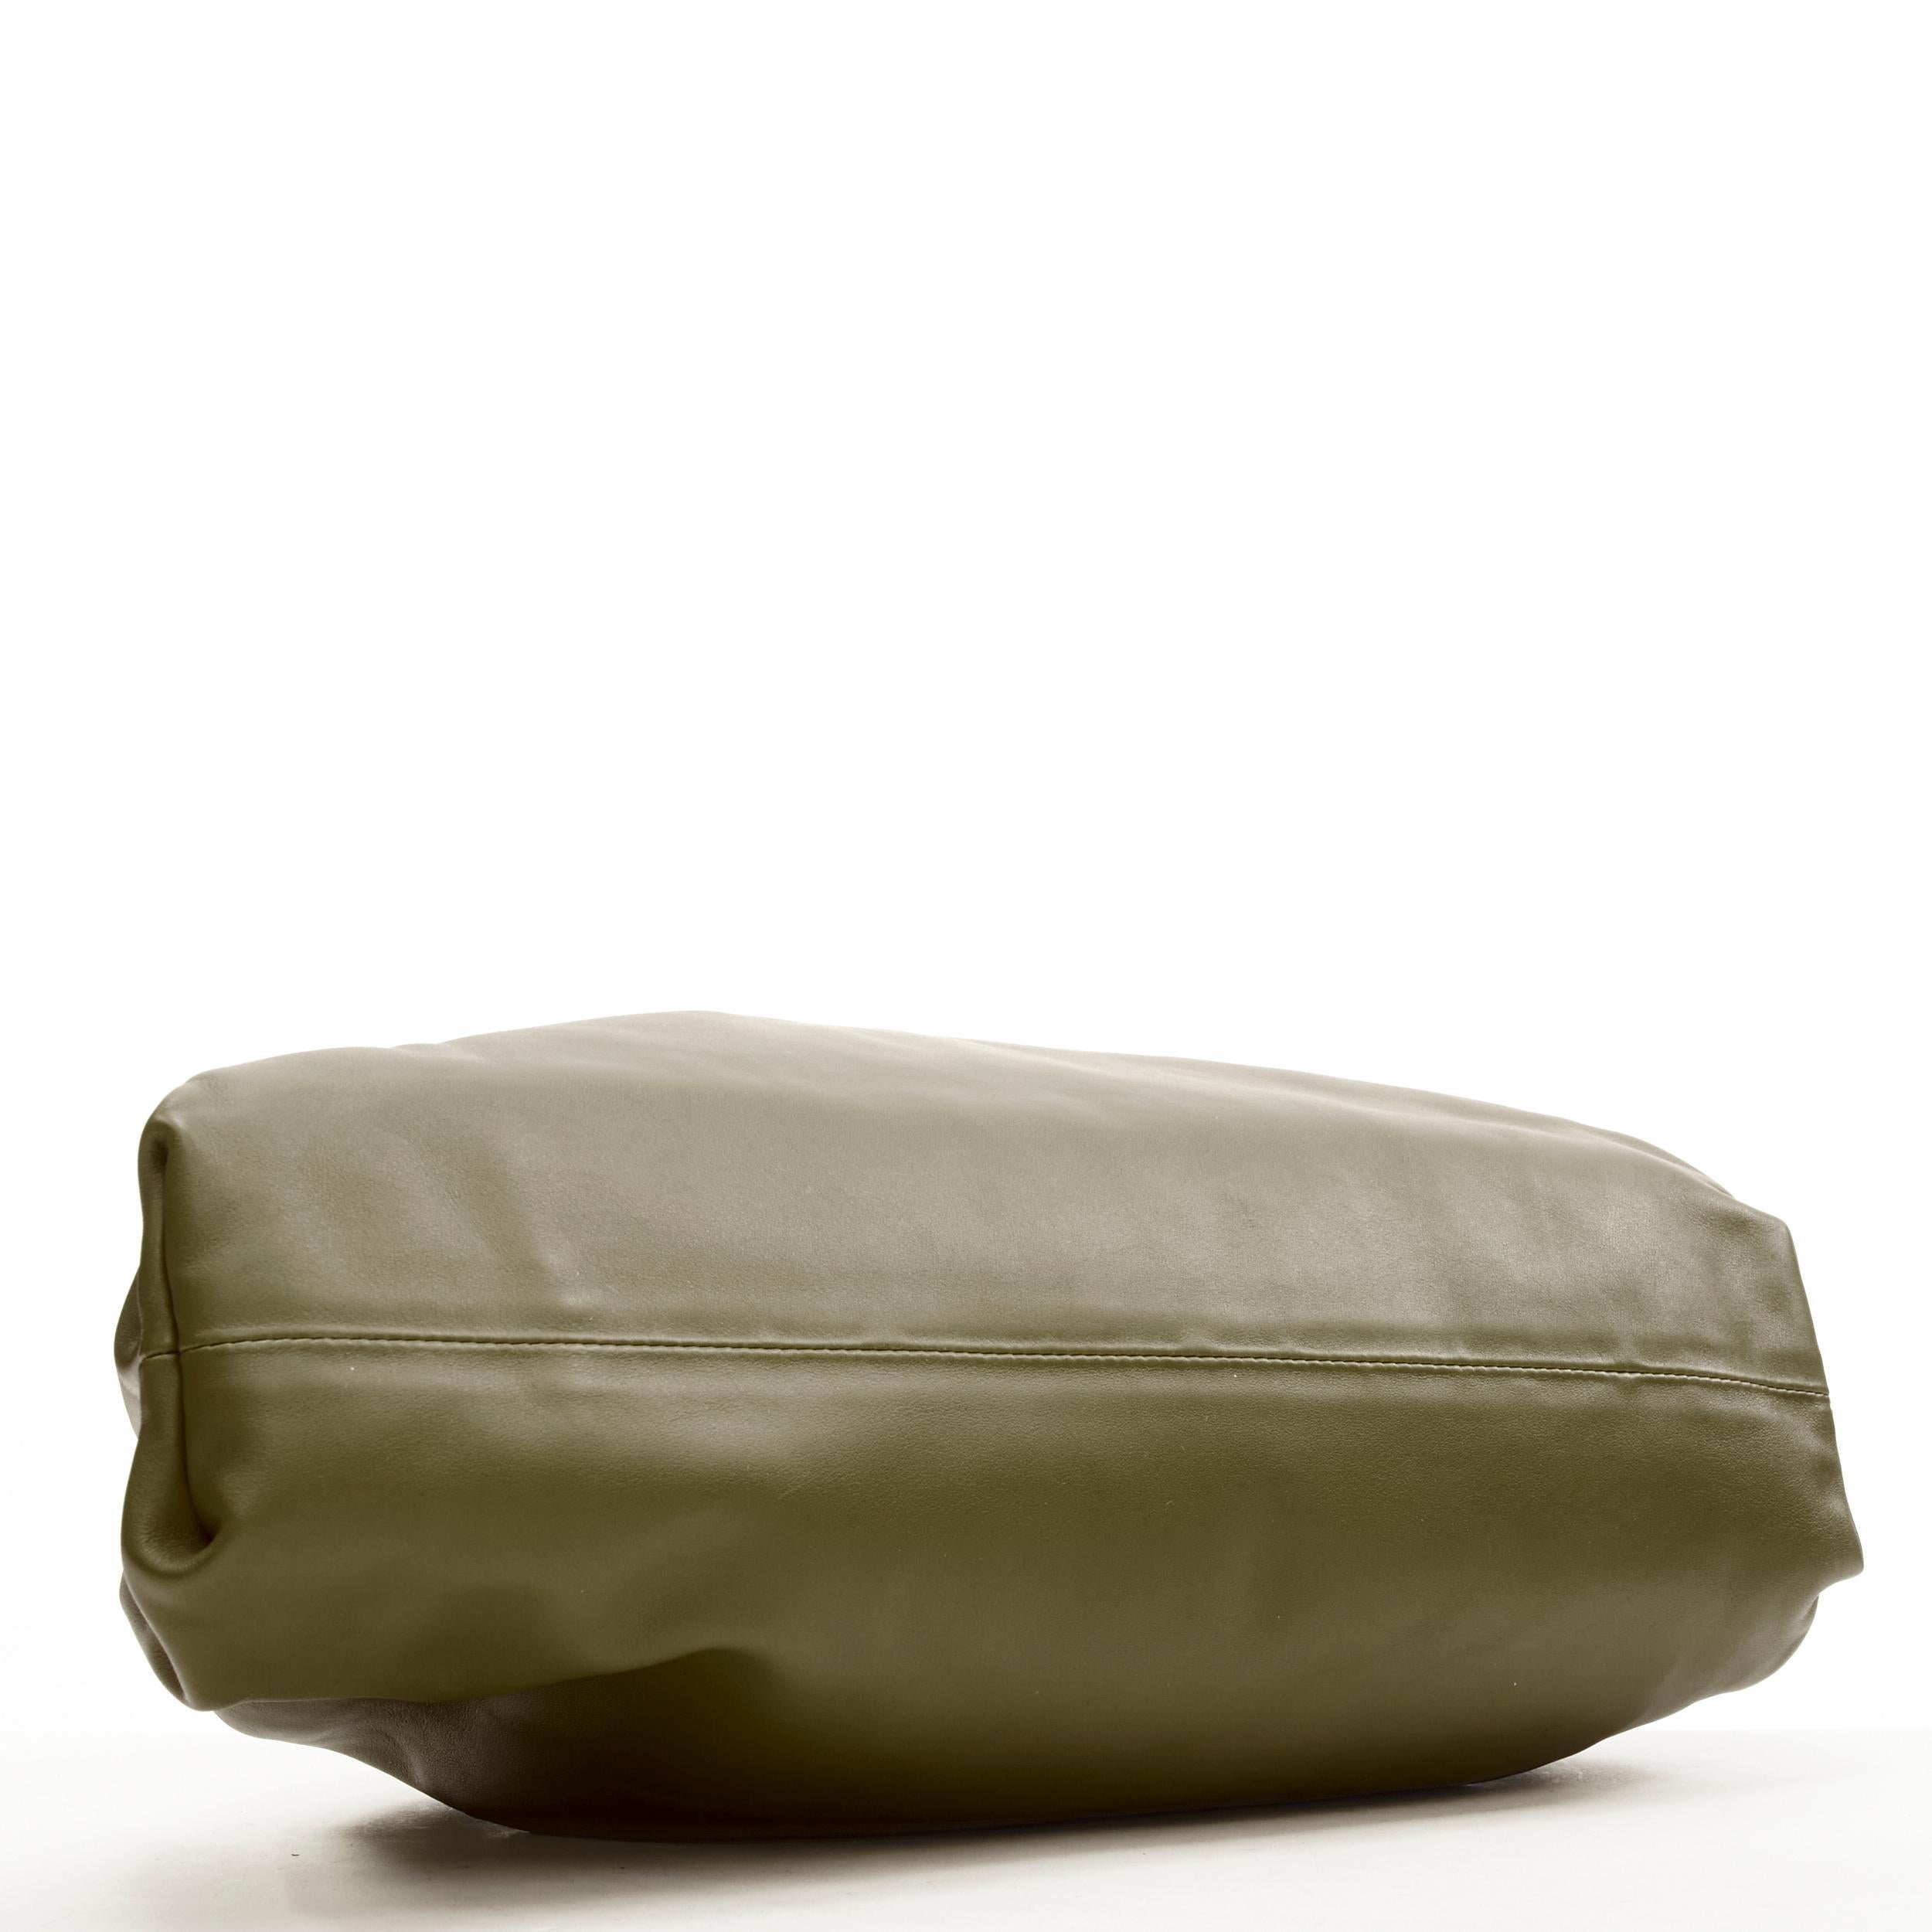 Brown BOTTEGA VENETA The Pouch Large Olive green leather gathered dumpling clutch bag